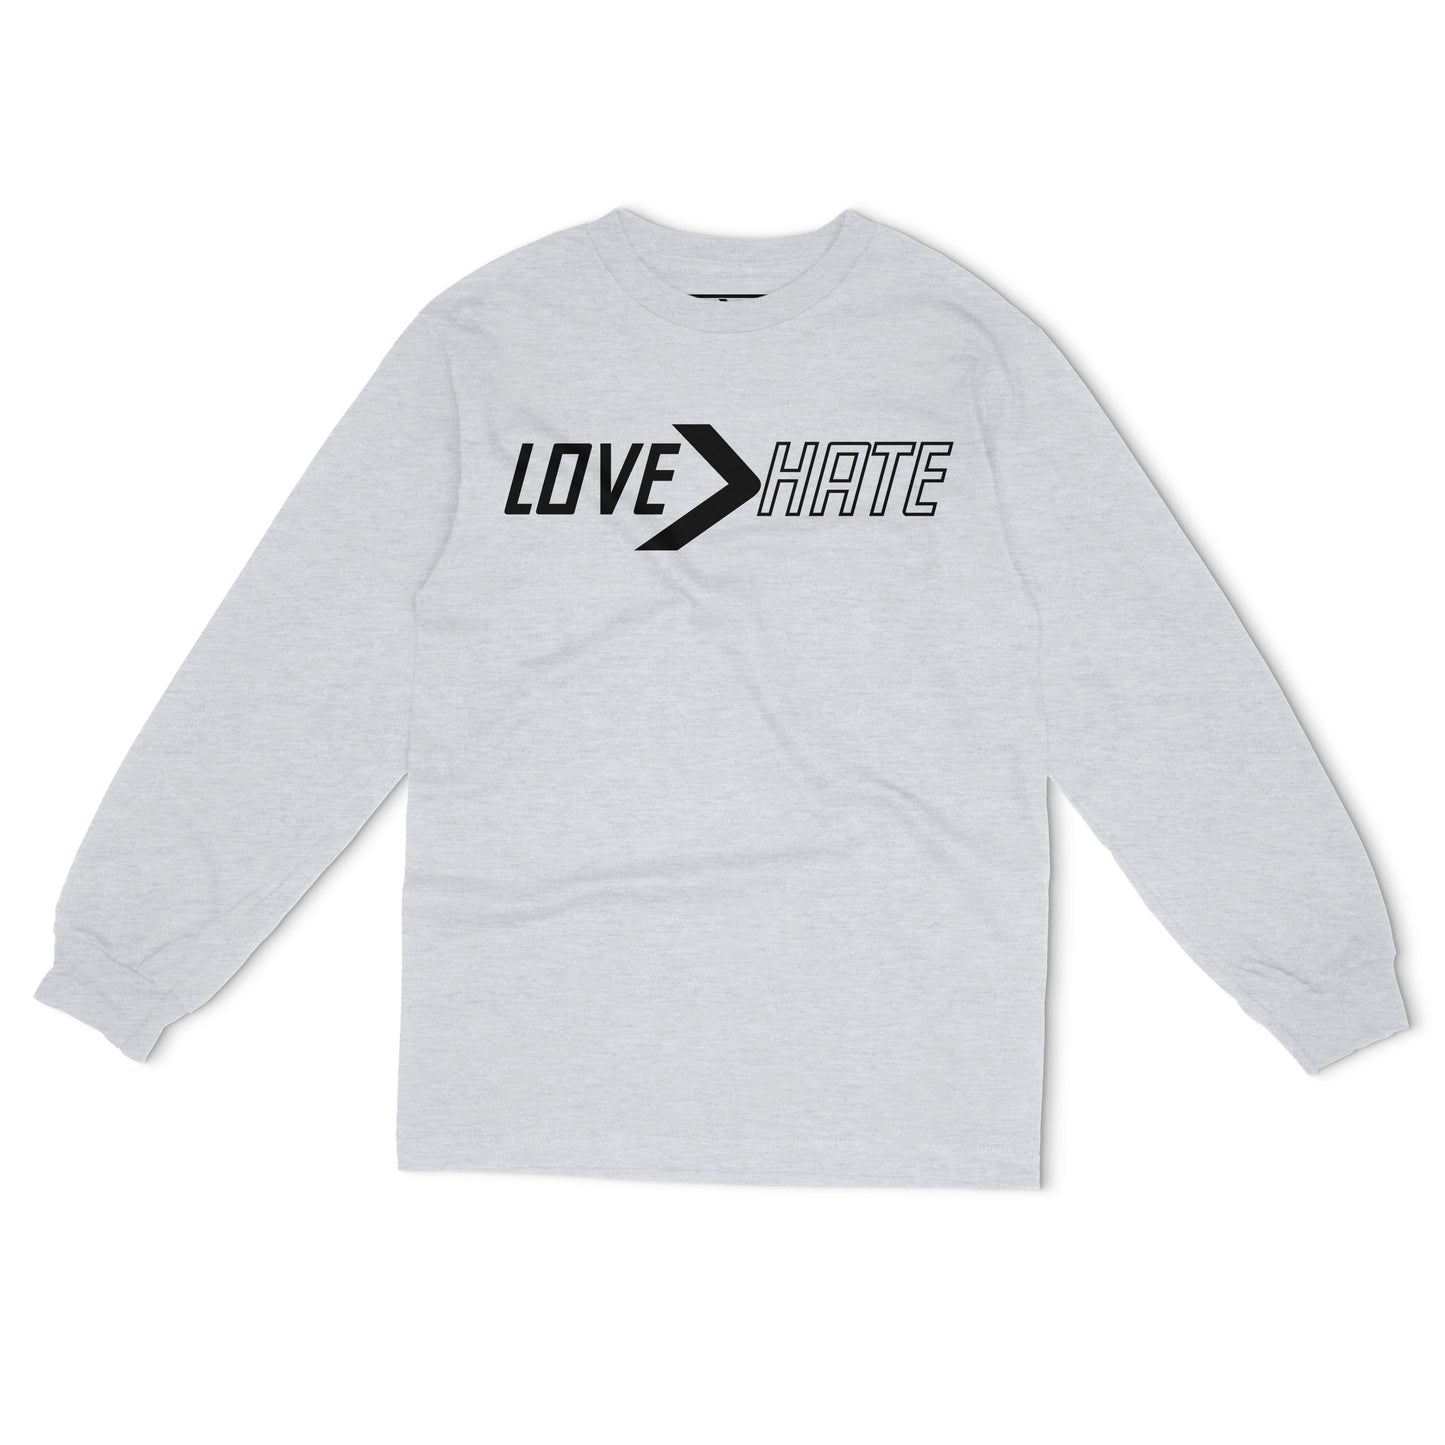 LOVE>hate ECO Long-Sleeve Top